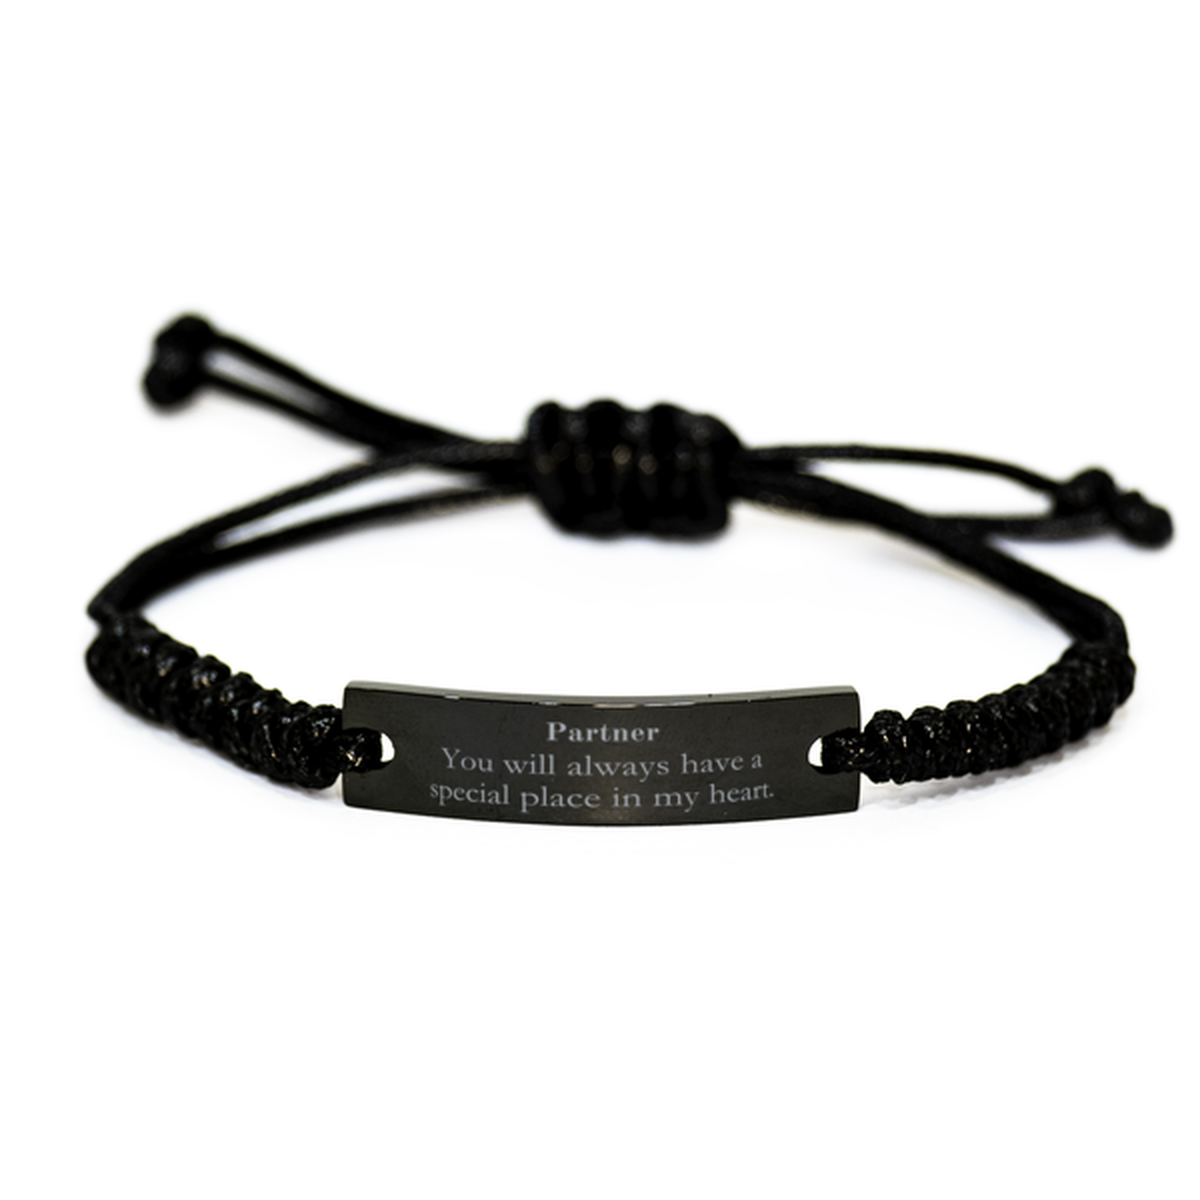 Partner Black Rope Bracelet - Special Place in Heart Engraved Gift for Him Her, Relationship, Christmas, Hope, Inspirational